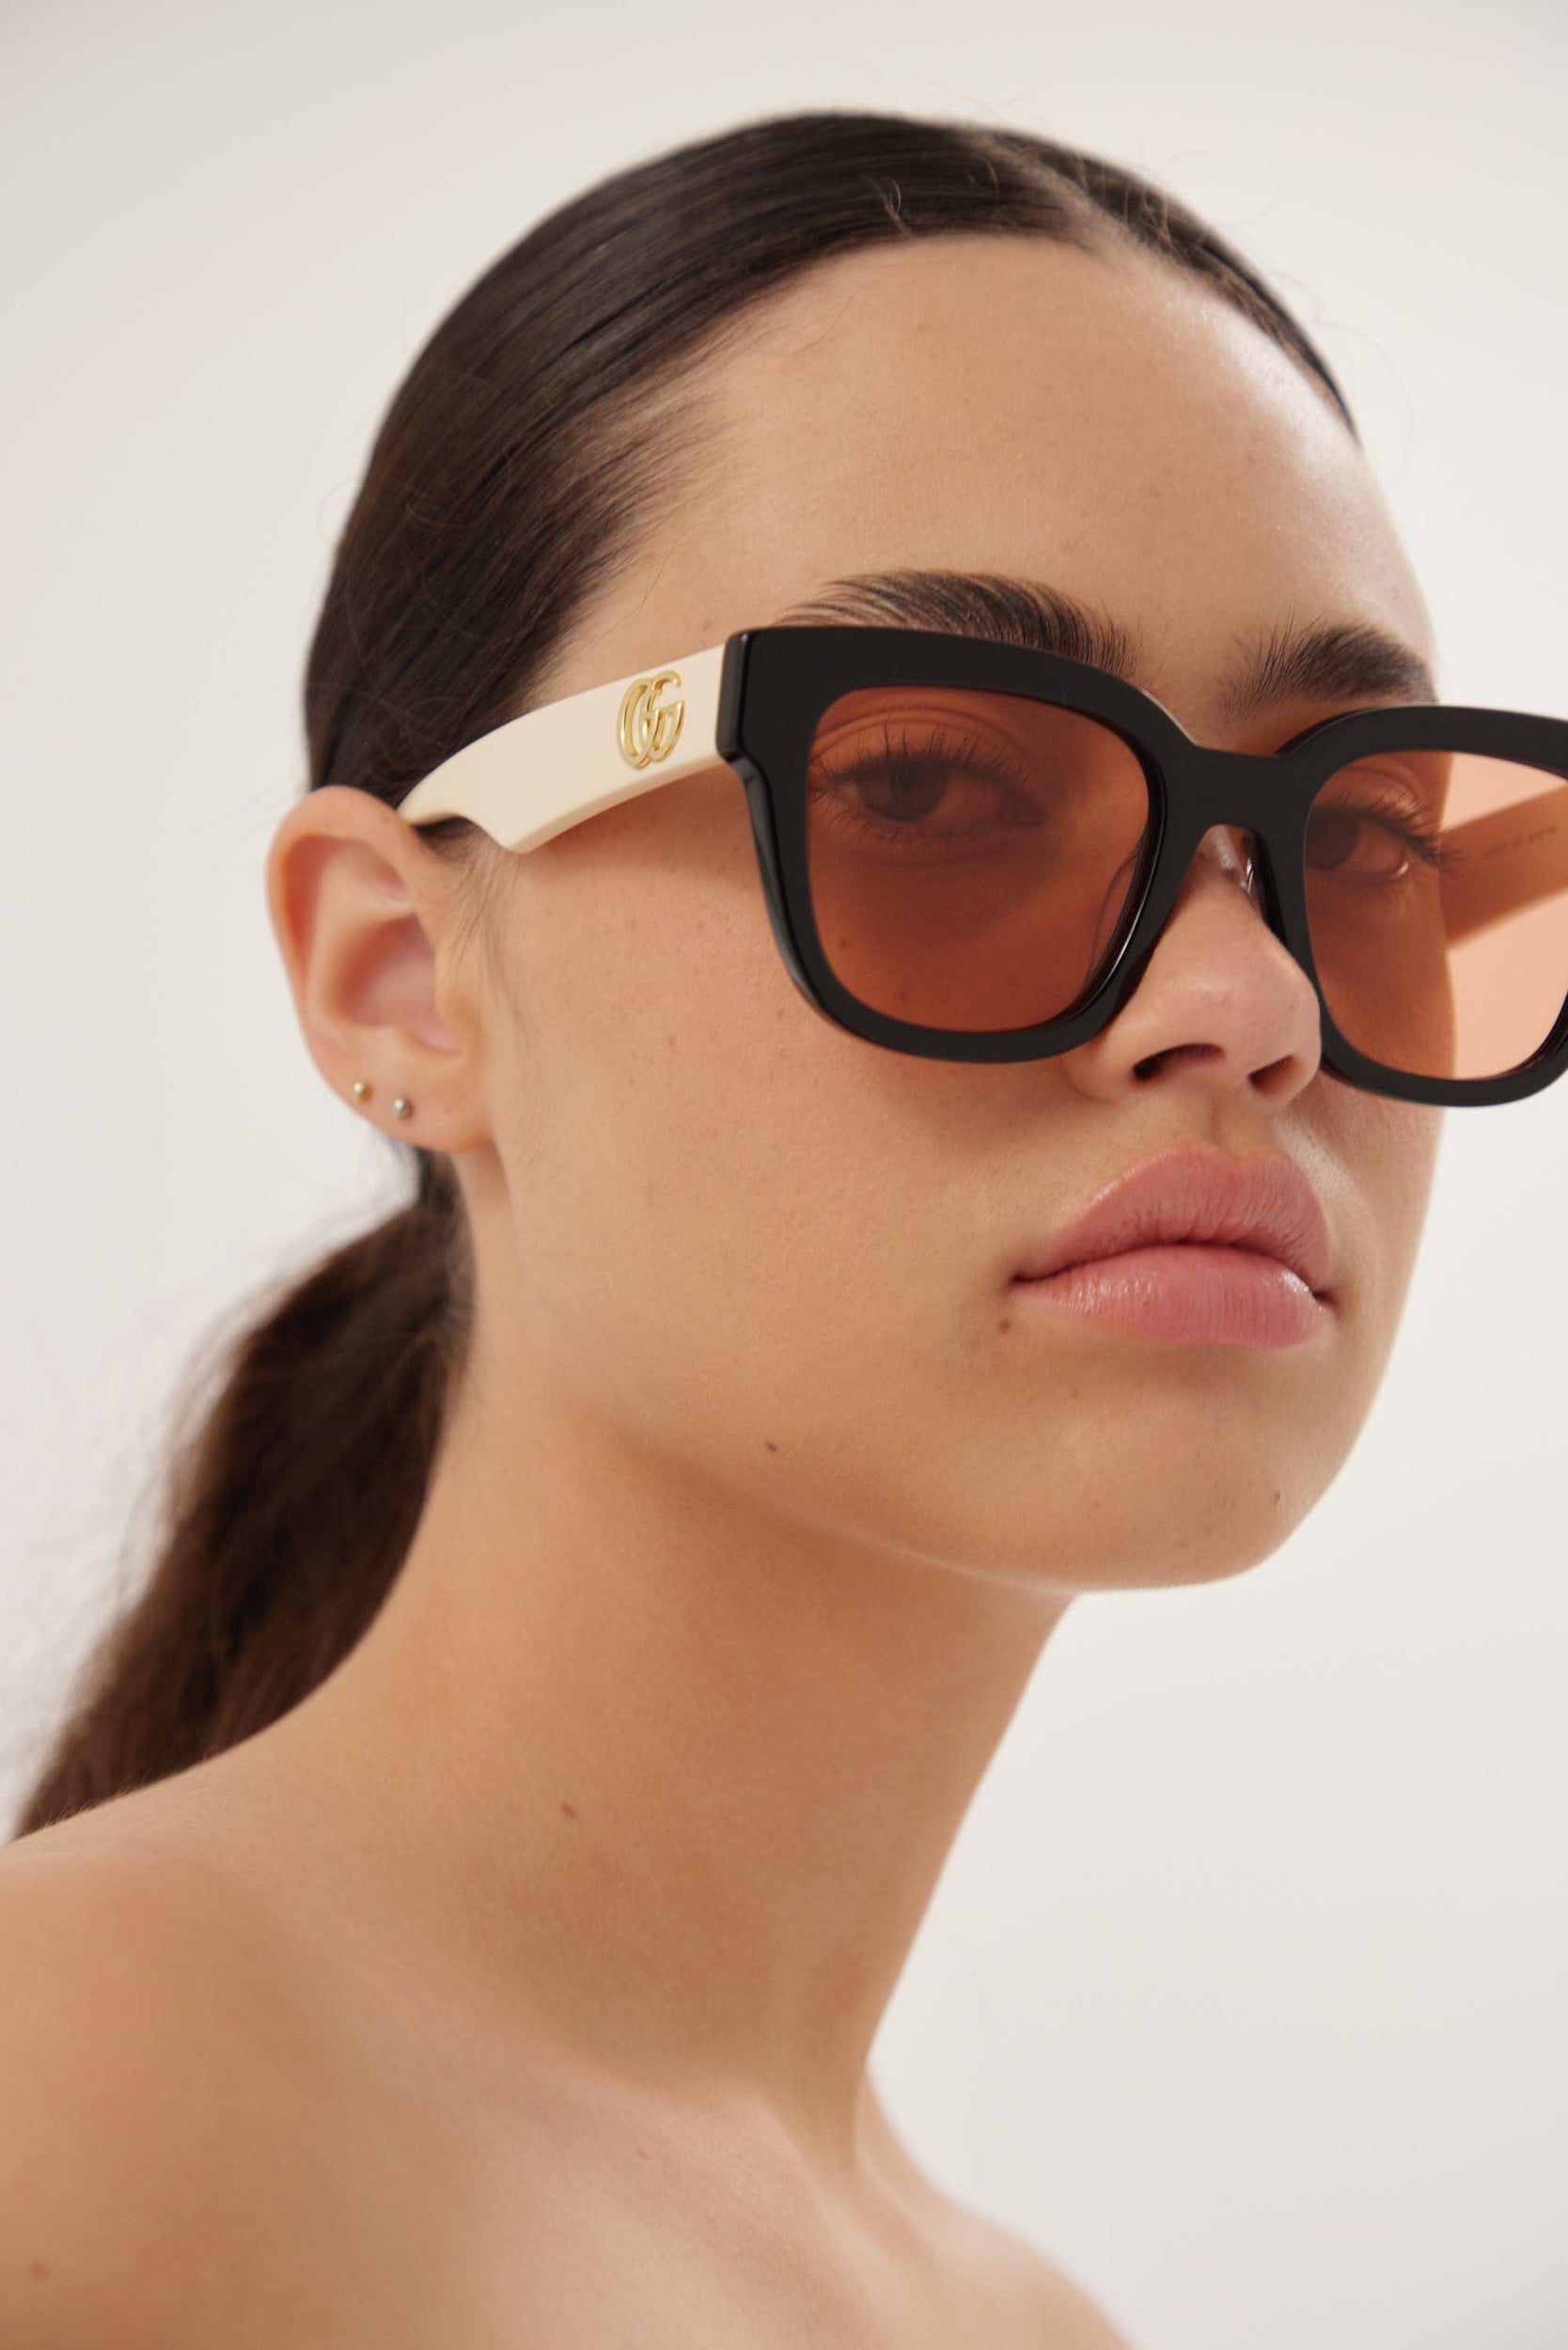 Gucci squared femenine black and ivory sunglasses - Eyewear Club